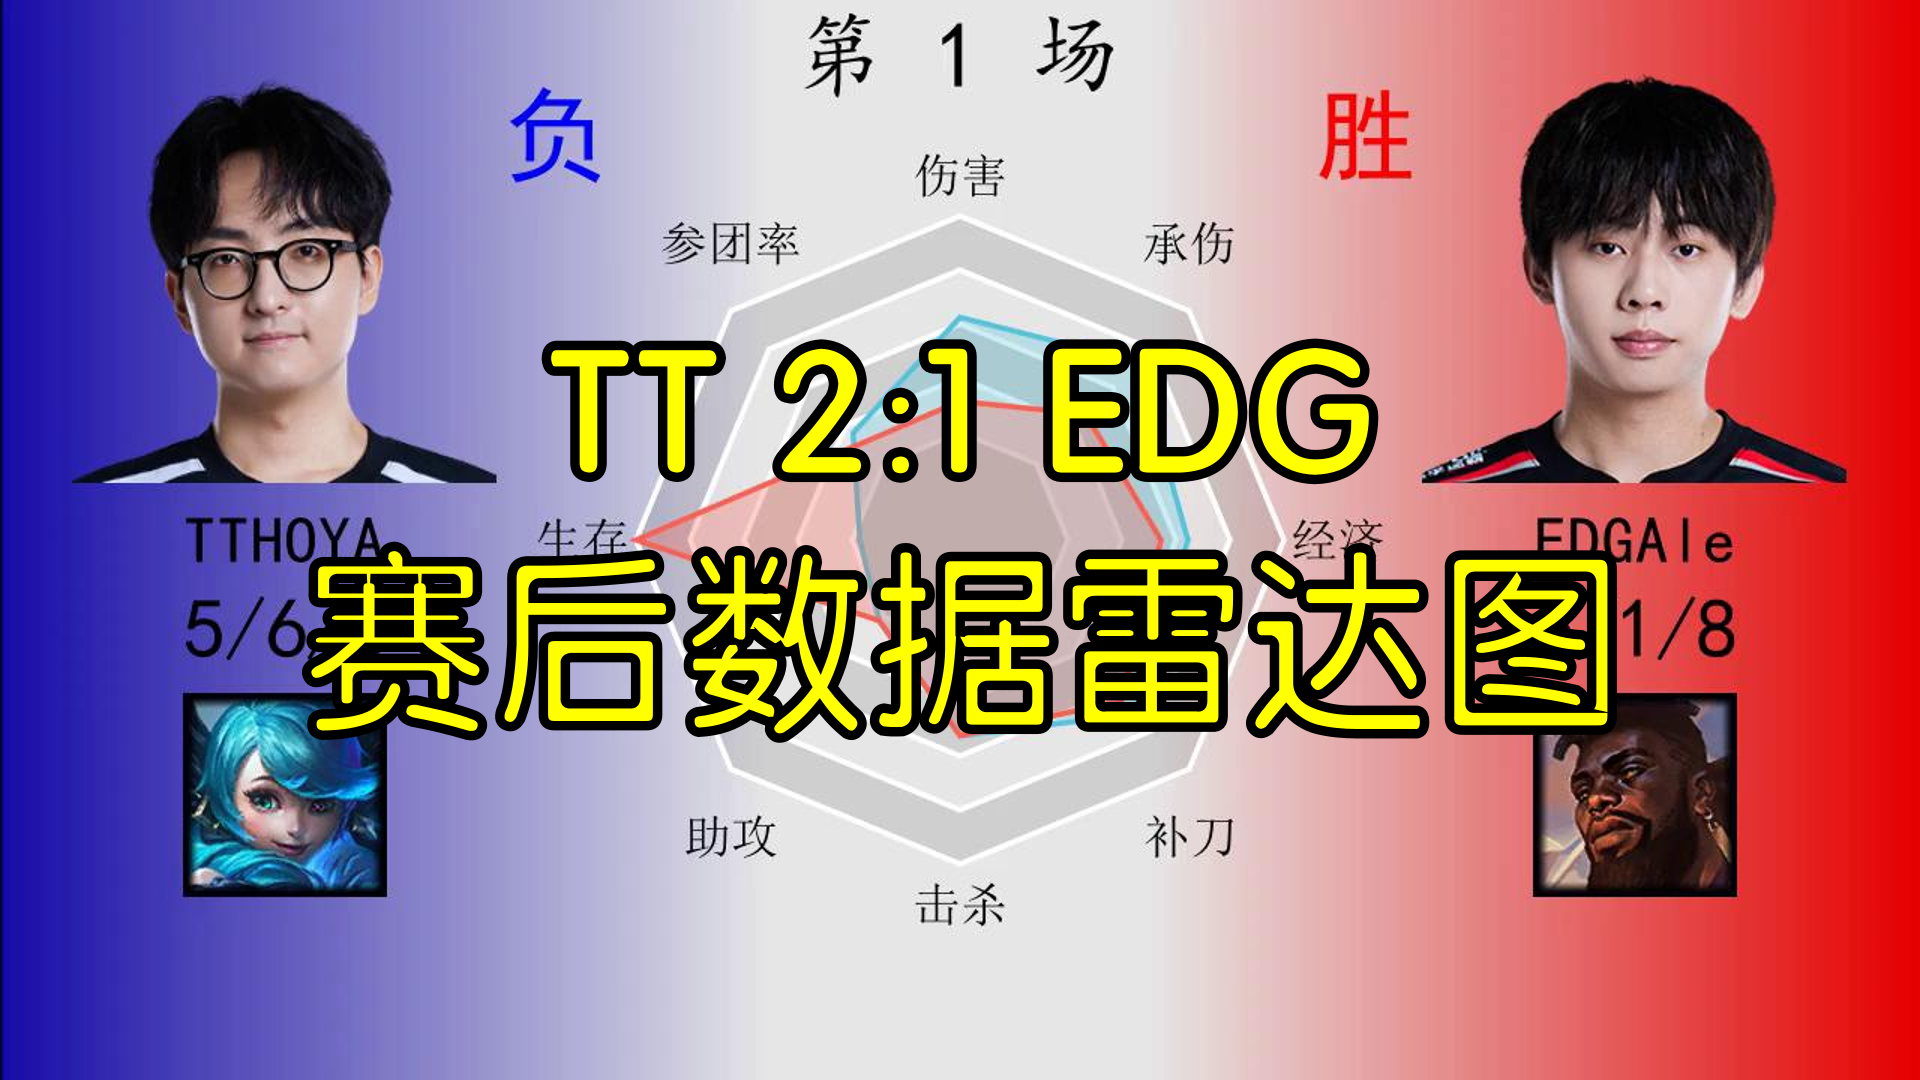 TT 2:1 EDG赛后数据雷达图